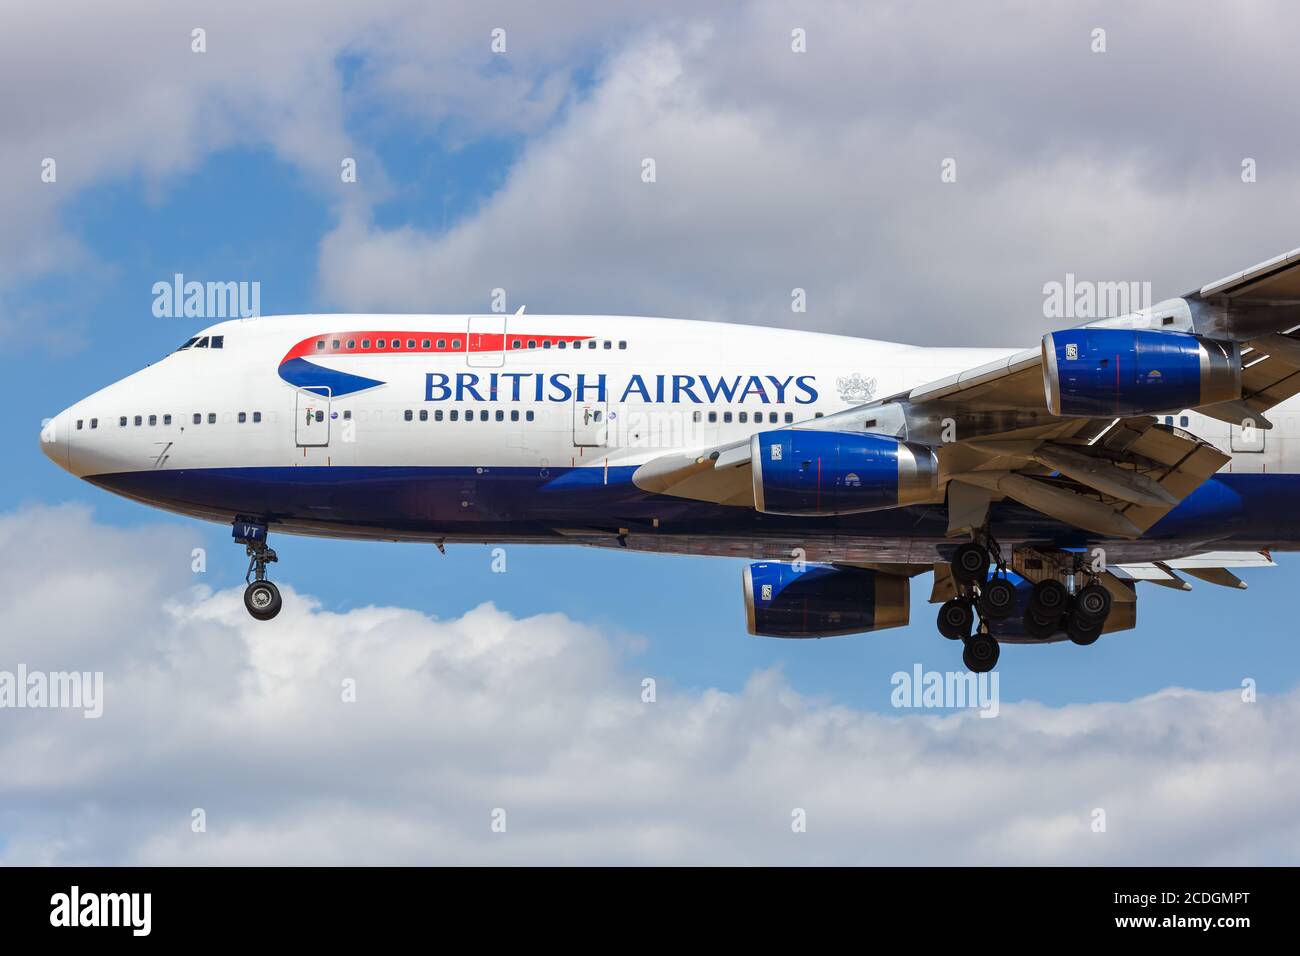 London, United Kingdom - August 1, 2018: British Airways Boeing 747-400 airplane at London Heathrow Airport (LHR) in the United Kingdom. Stock Photo